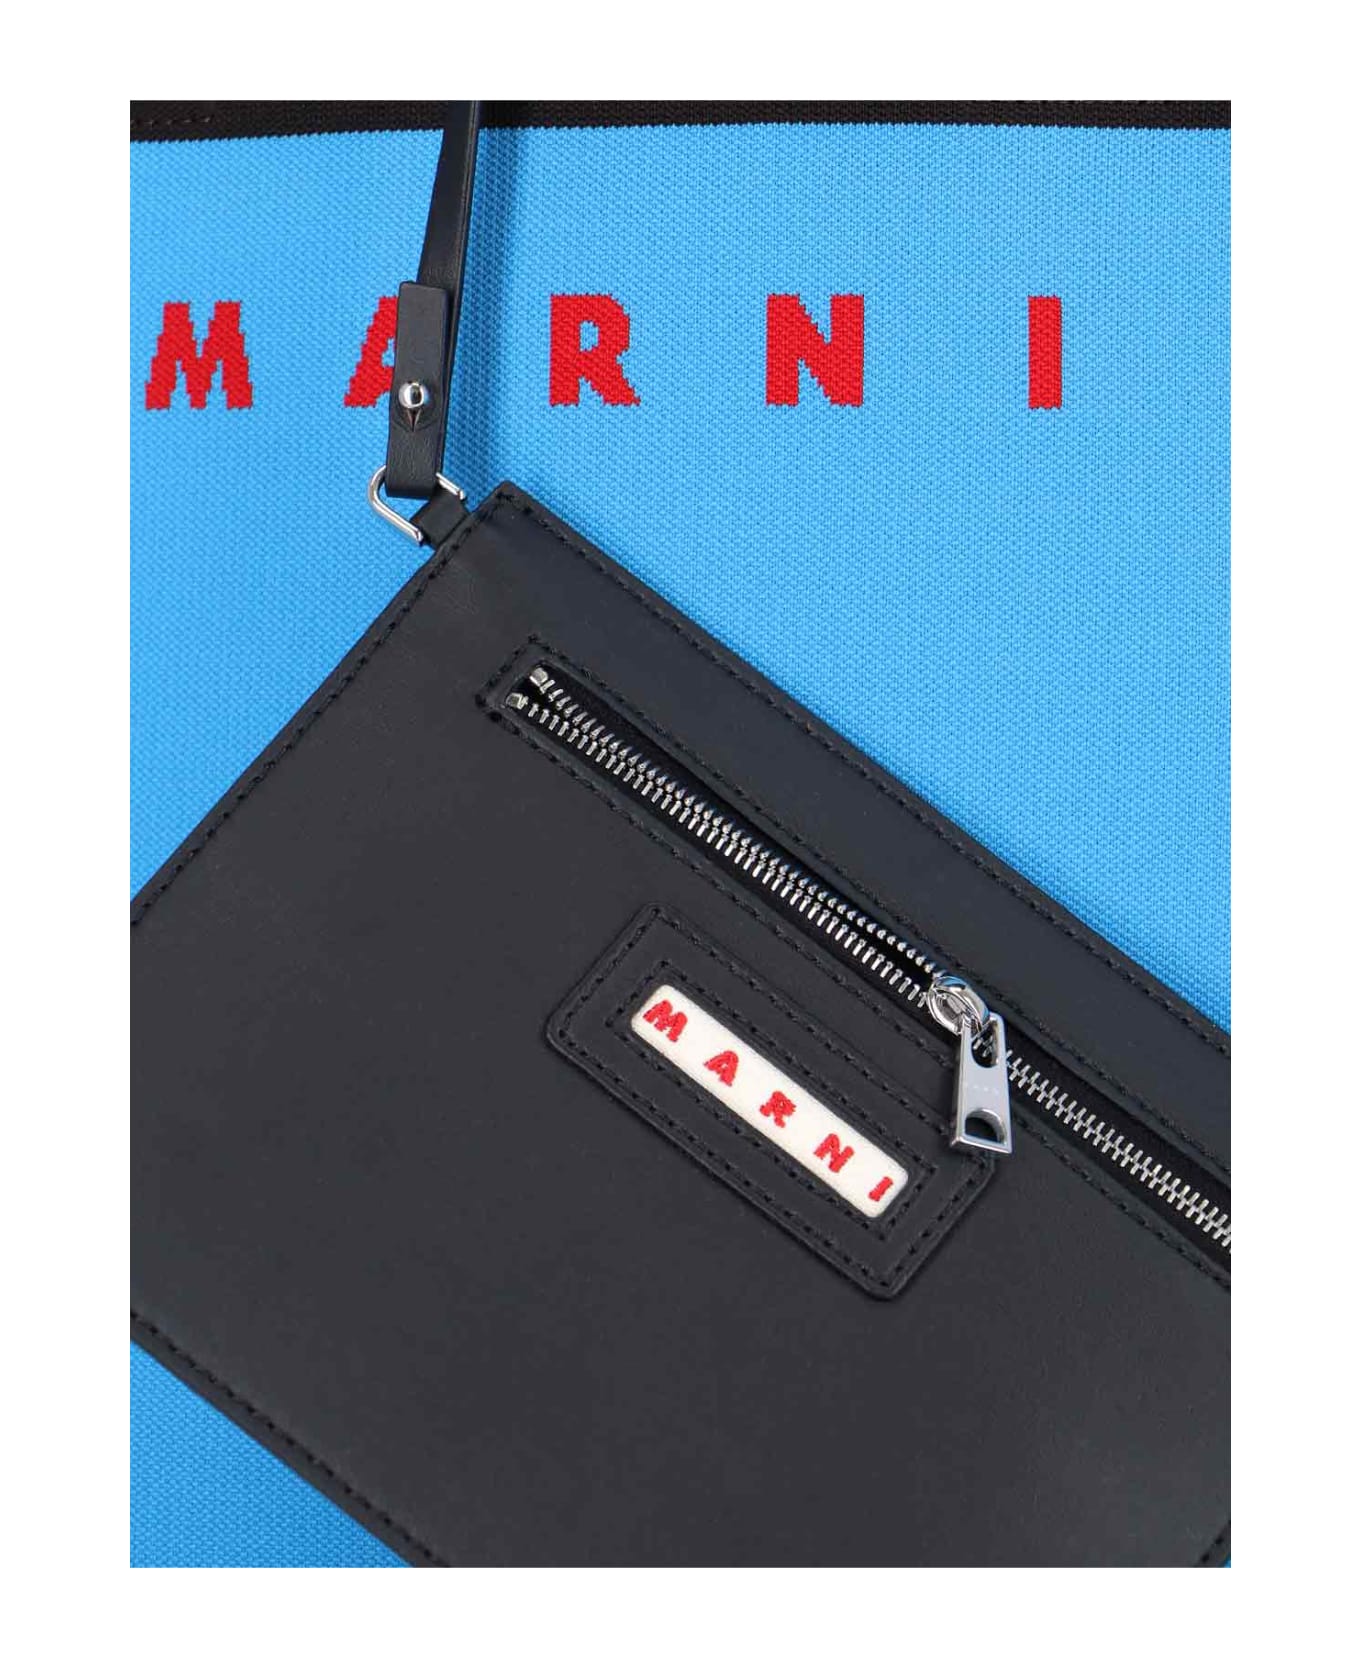 Marni Logo Tote Bag - Blue